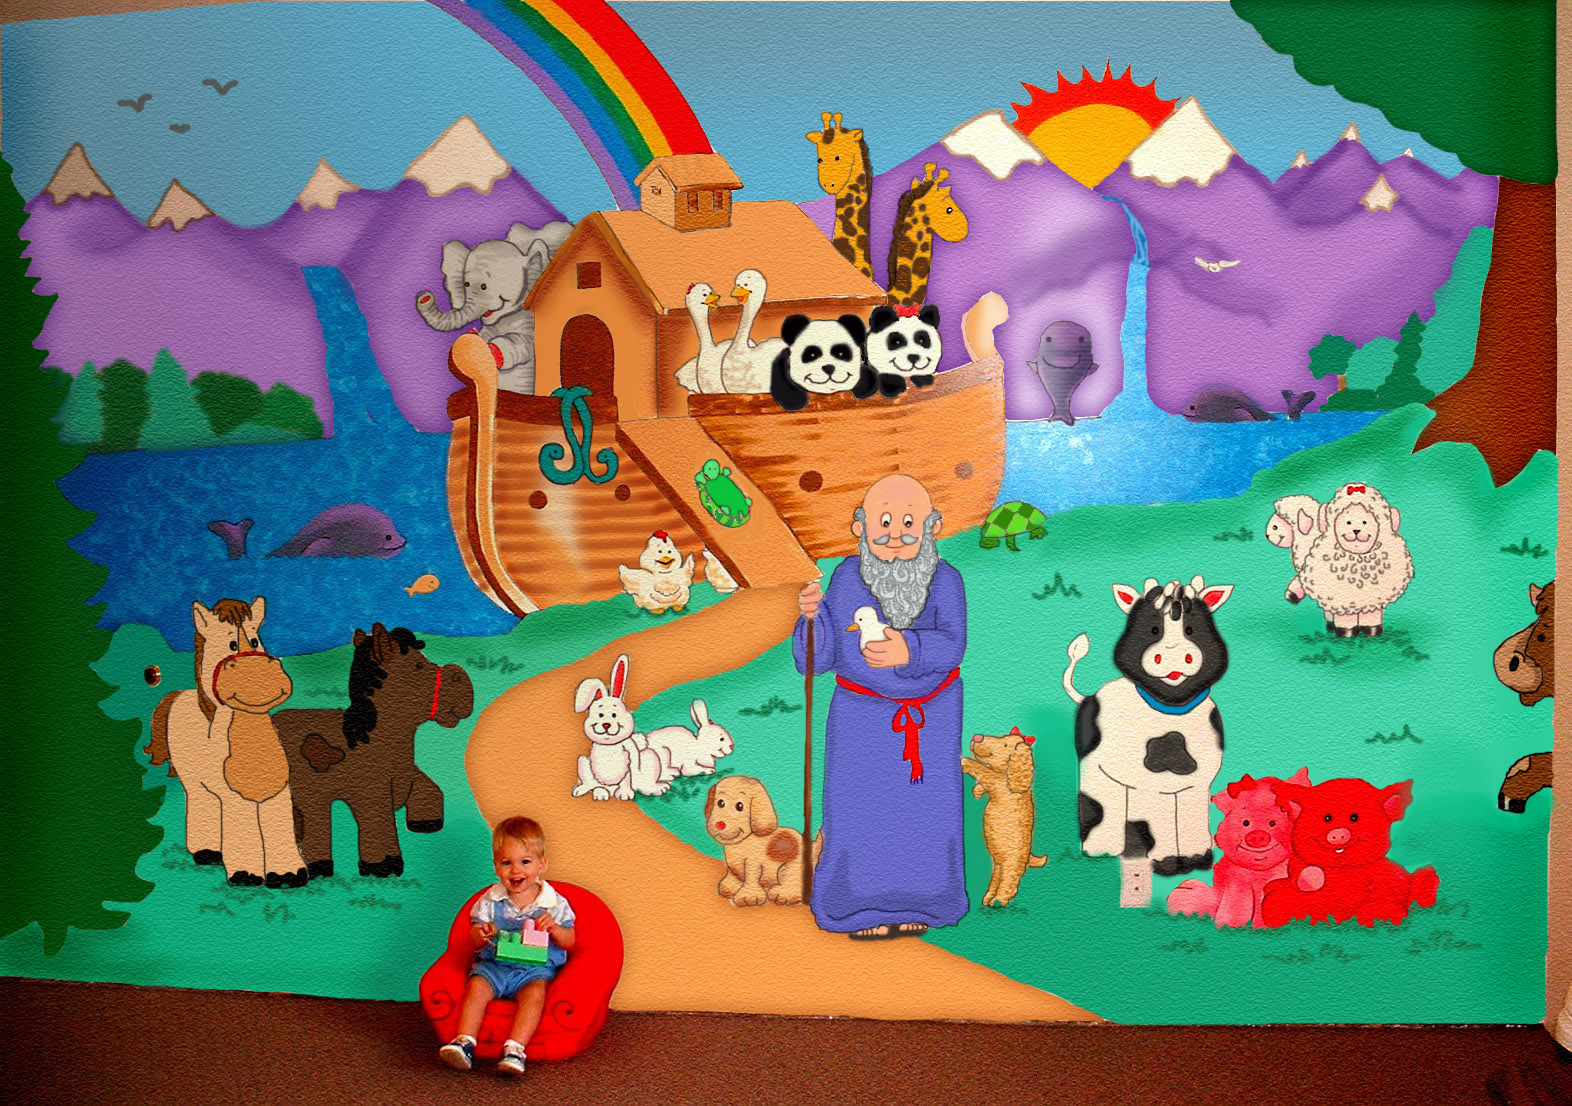 Noah's Ark mural.jpg